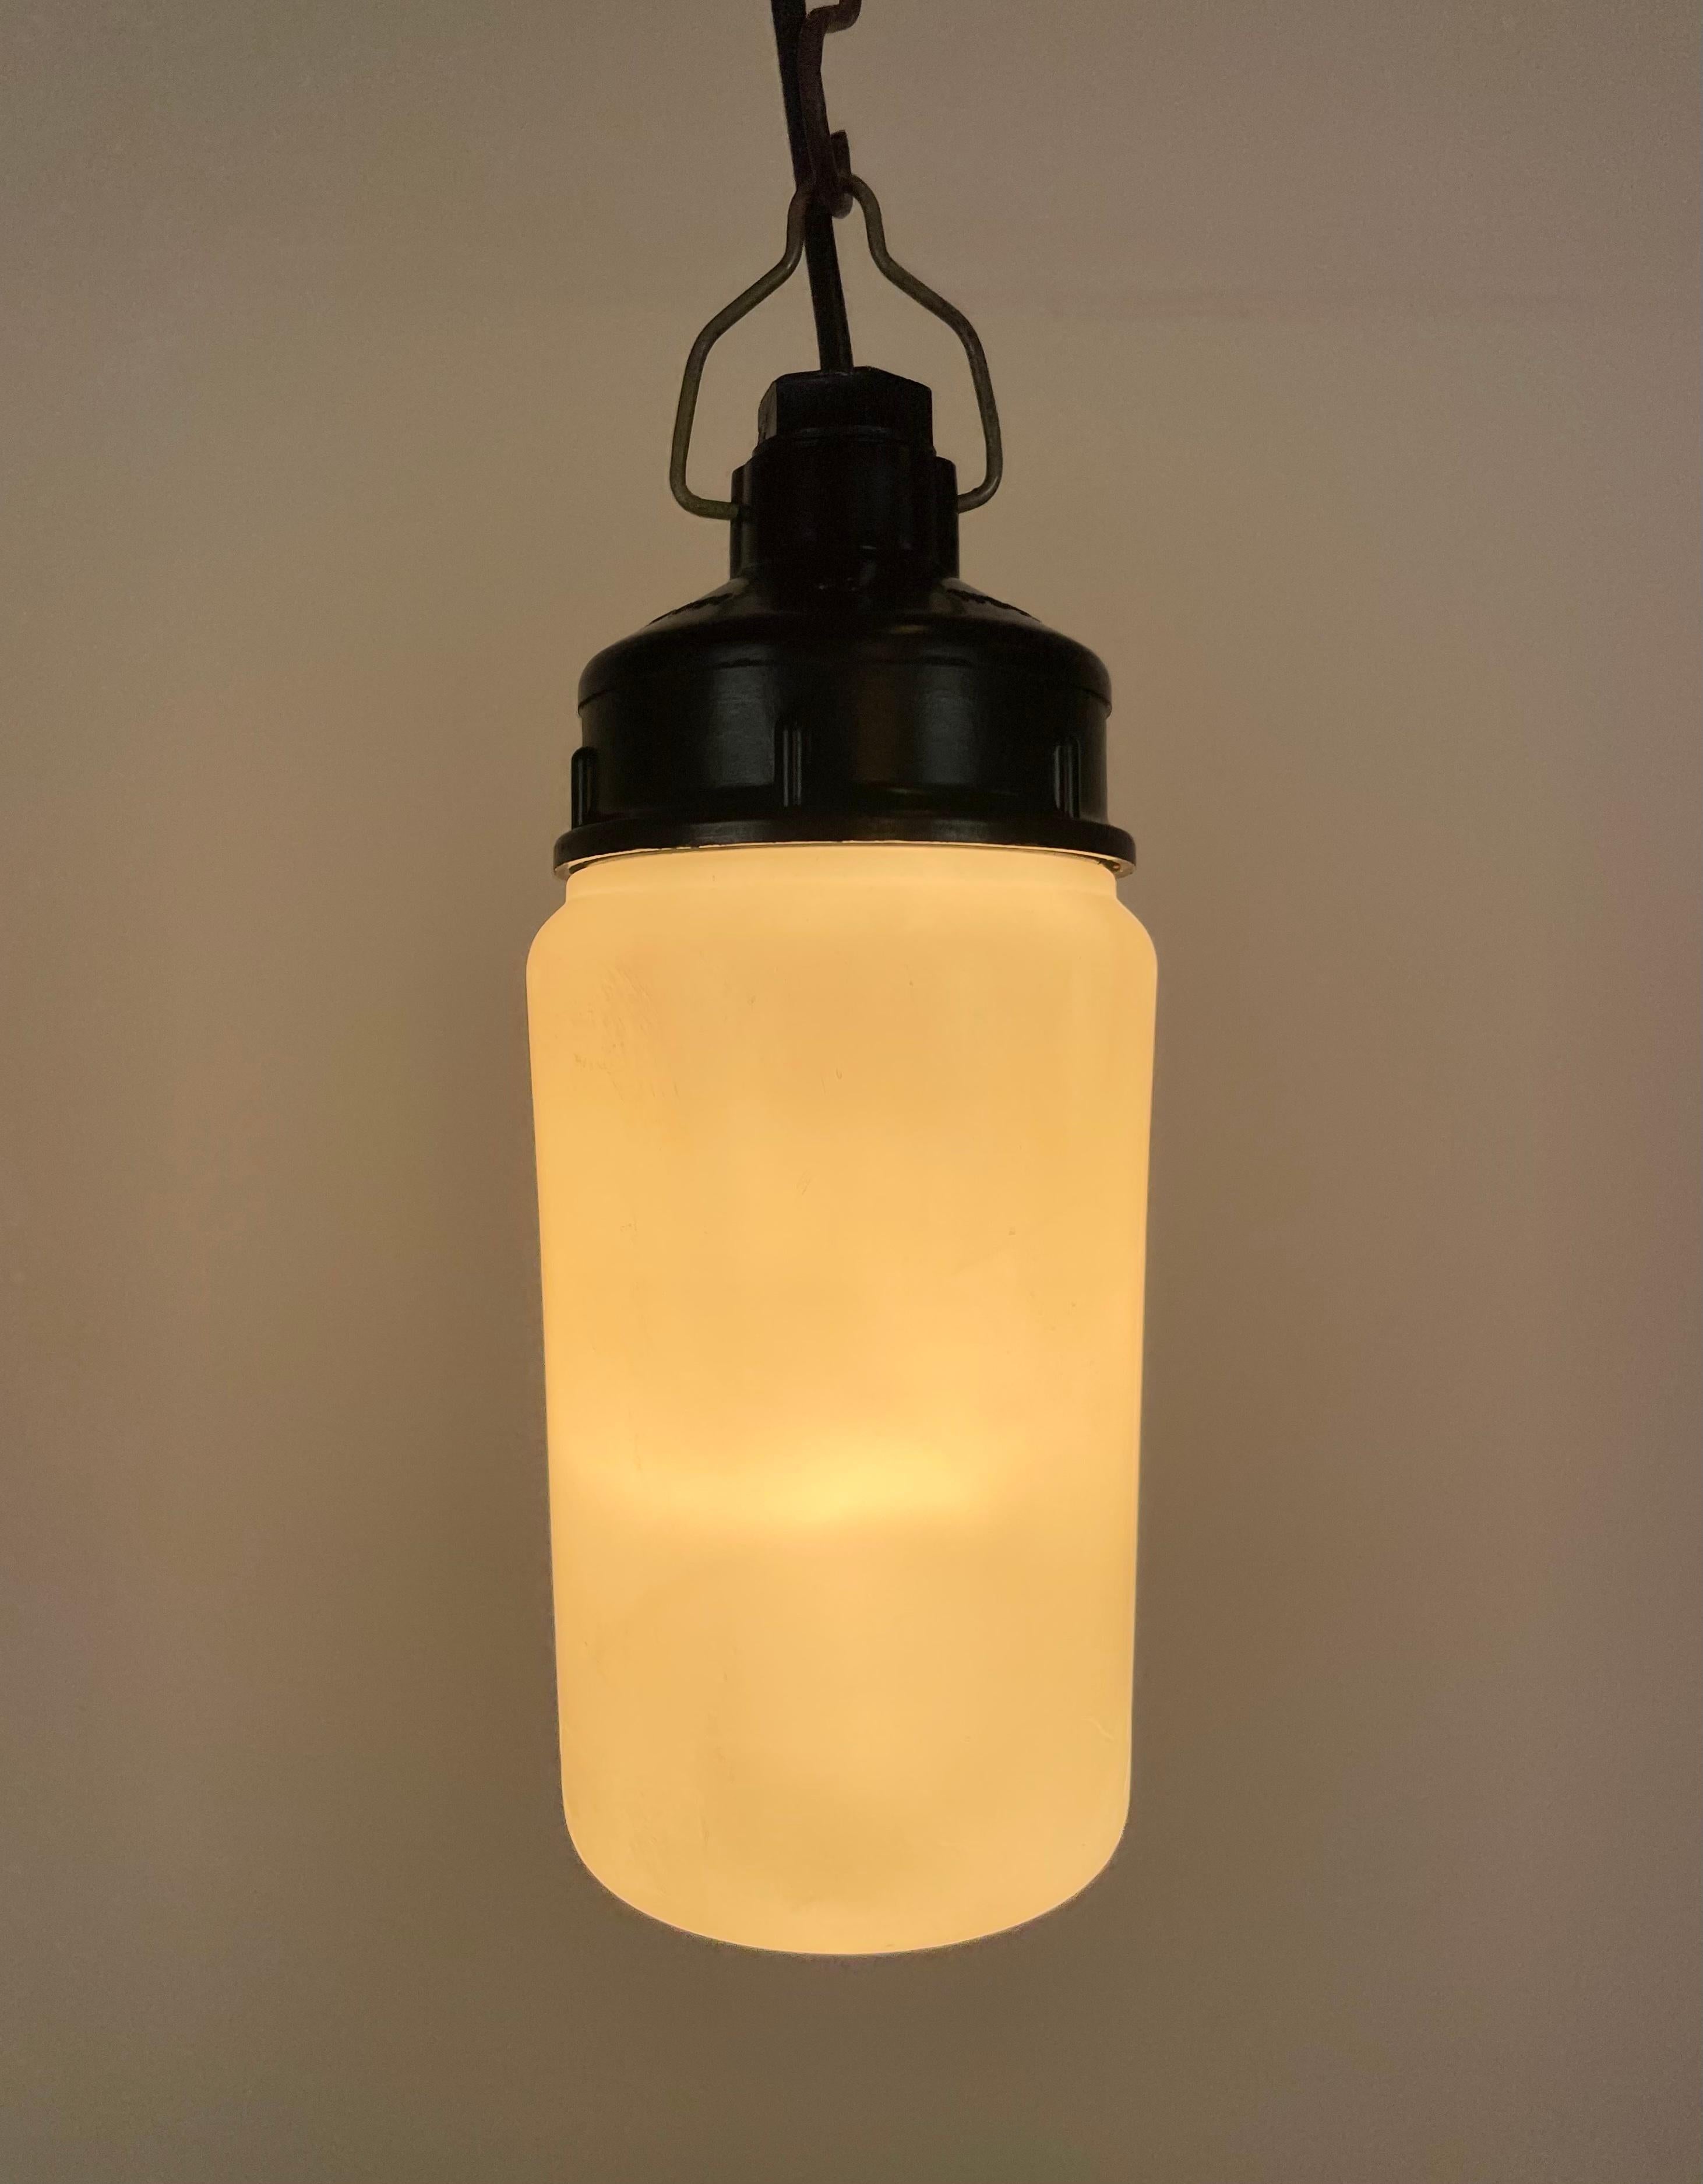 Industrial Bakelite Pendant Light with Milk Glass, 1970s For Sale 4